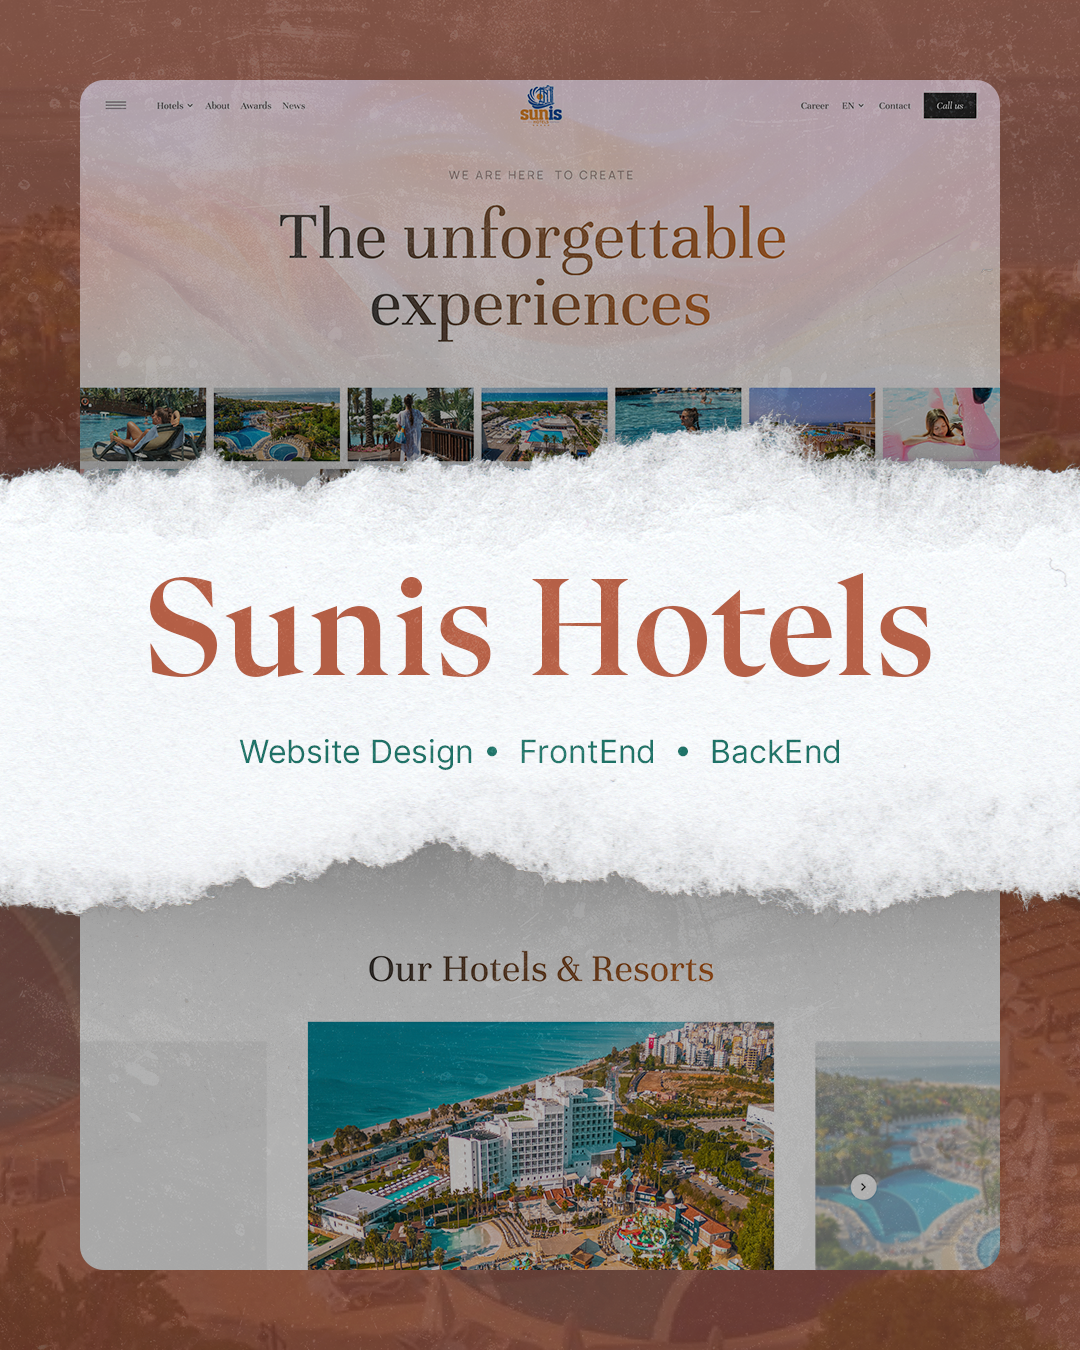 Sunis Hotels, Sunis Hotels, Antalya’da 4, İzmir’de 1 hotel ile 5 harika hoteller grubu...